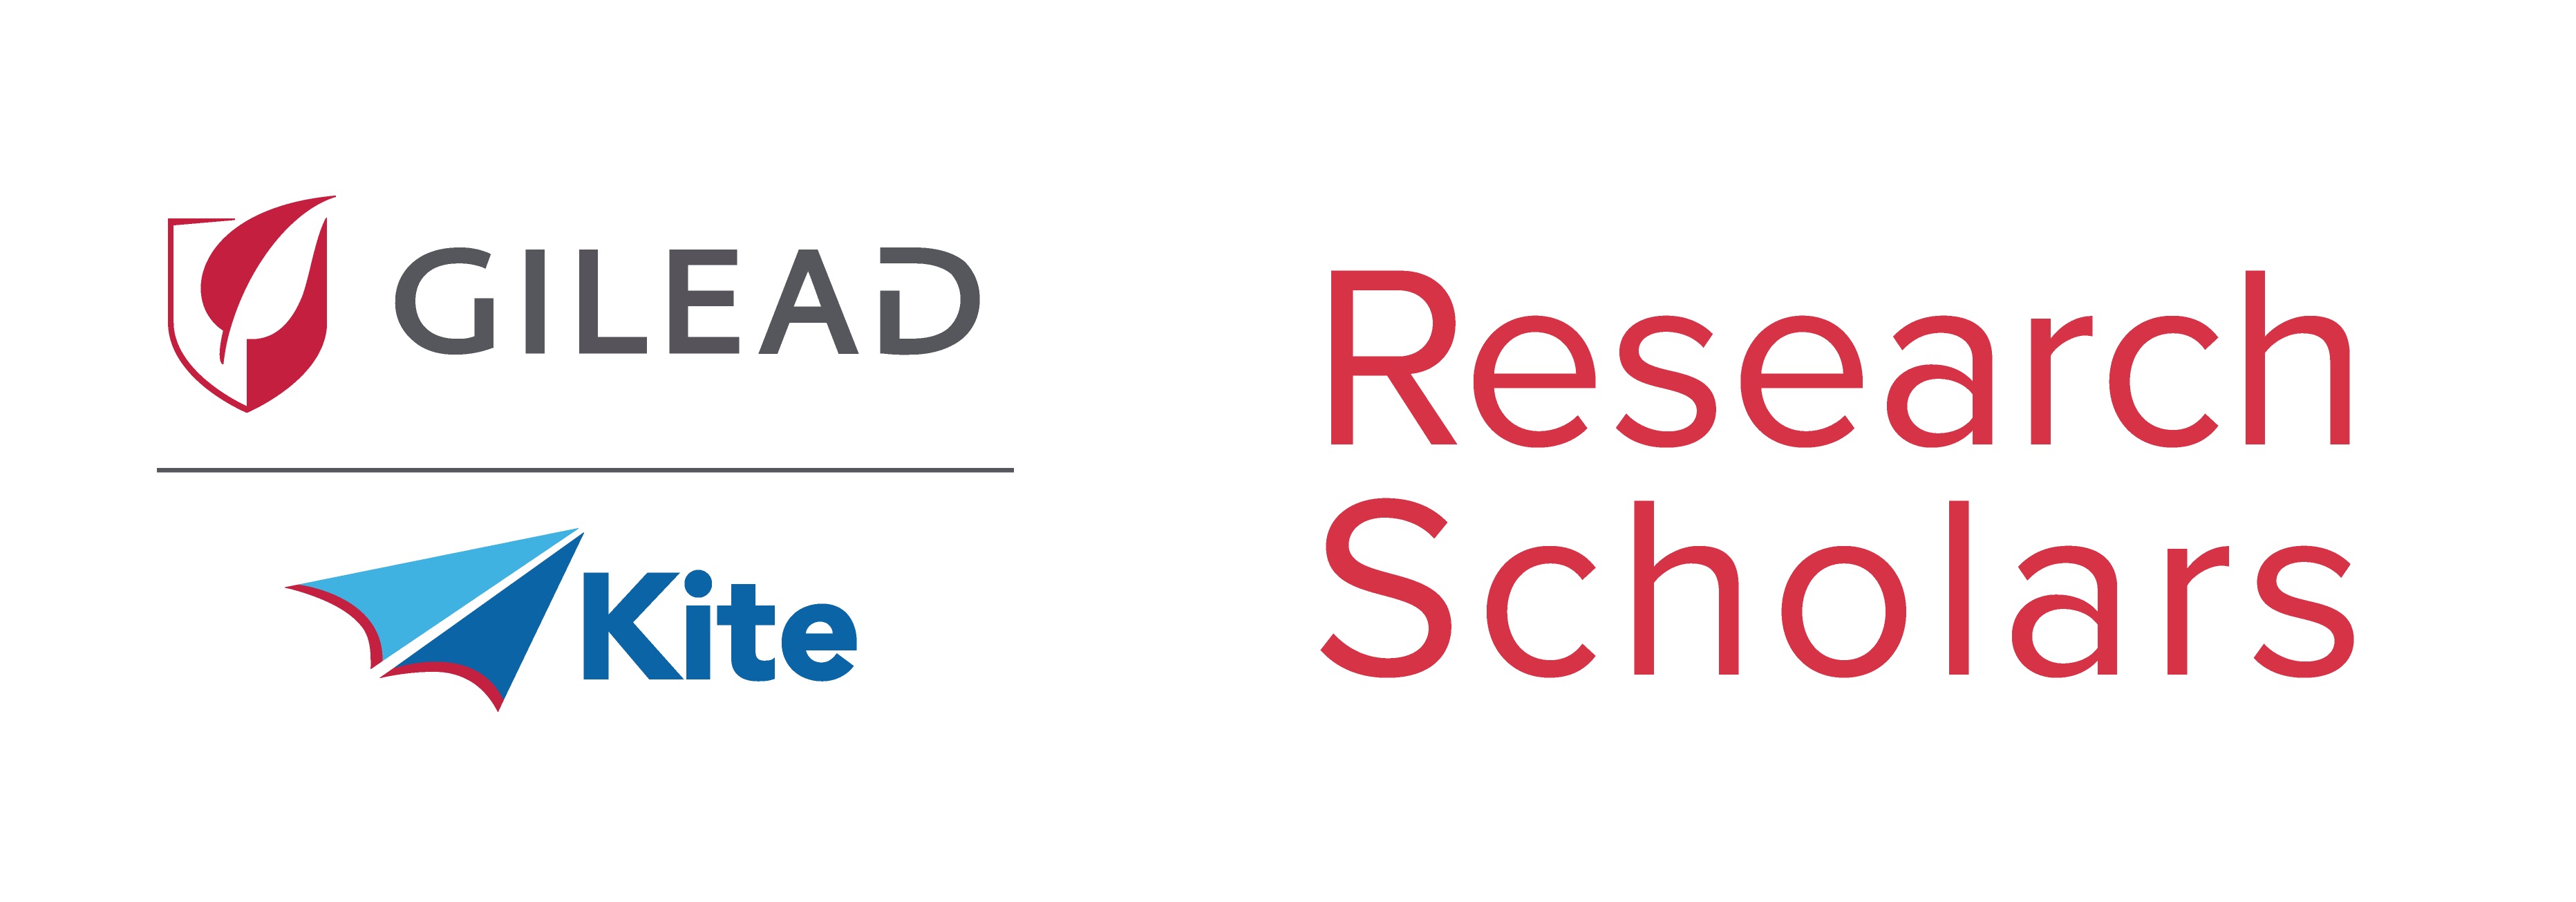 Gilead Sciences Research Scholars Program in HIV